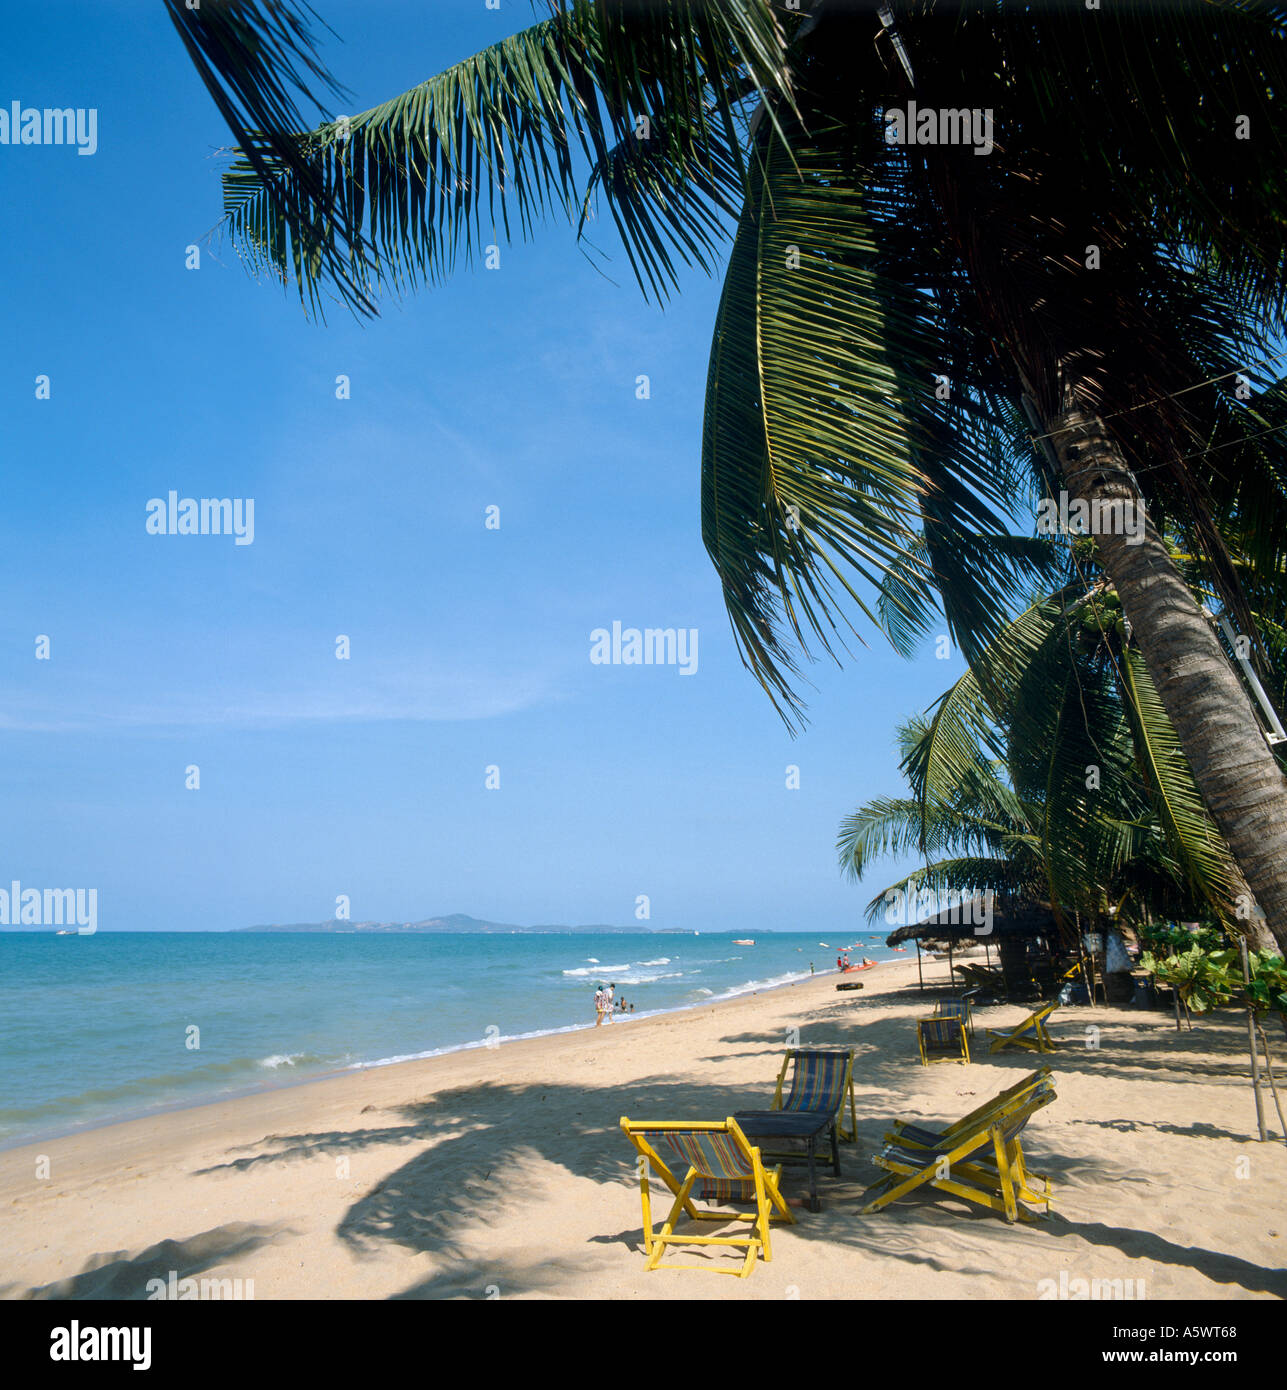 La plage de Jomtien, Pattaya, Thaïlande en 1990 Banque D'Images